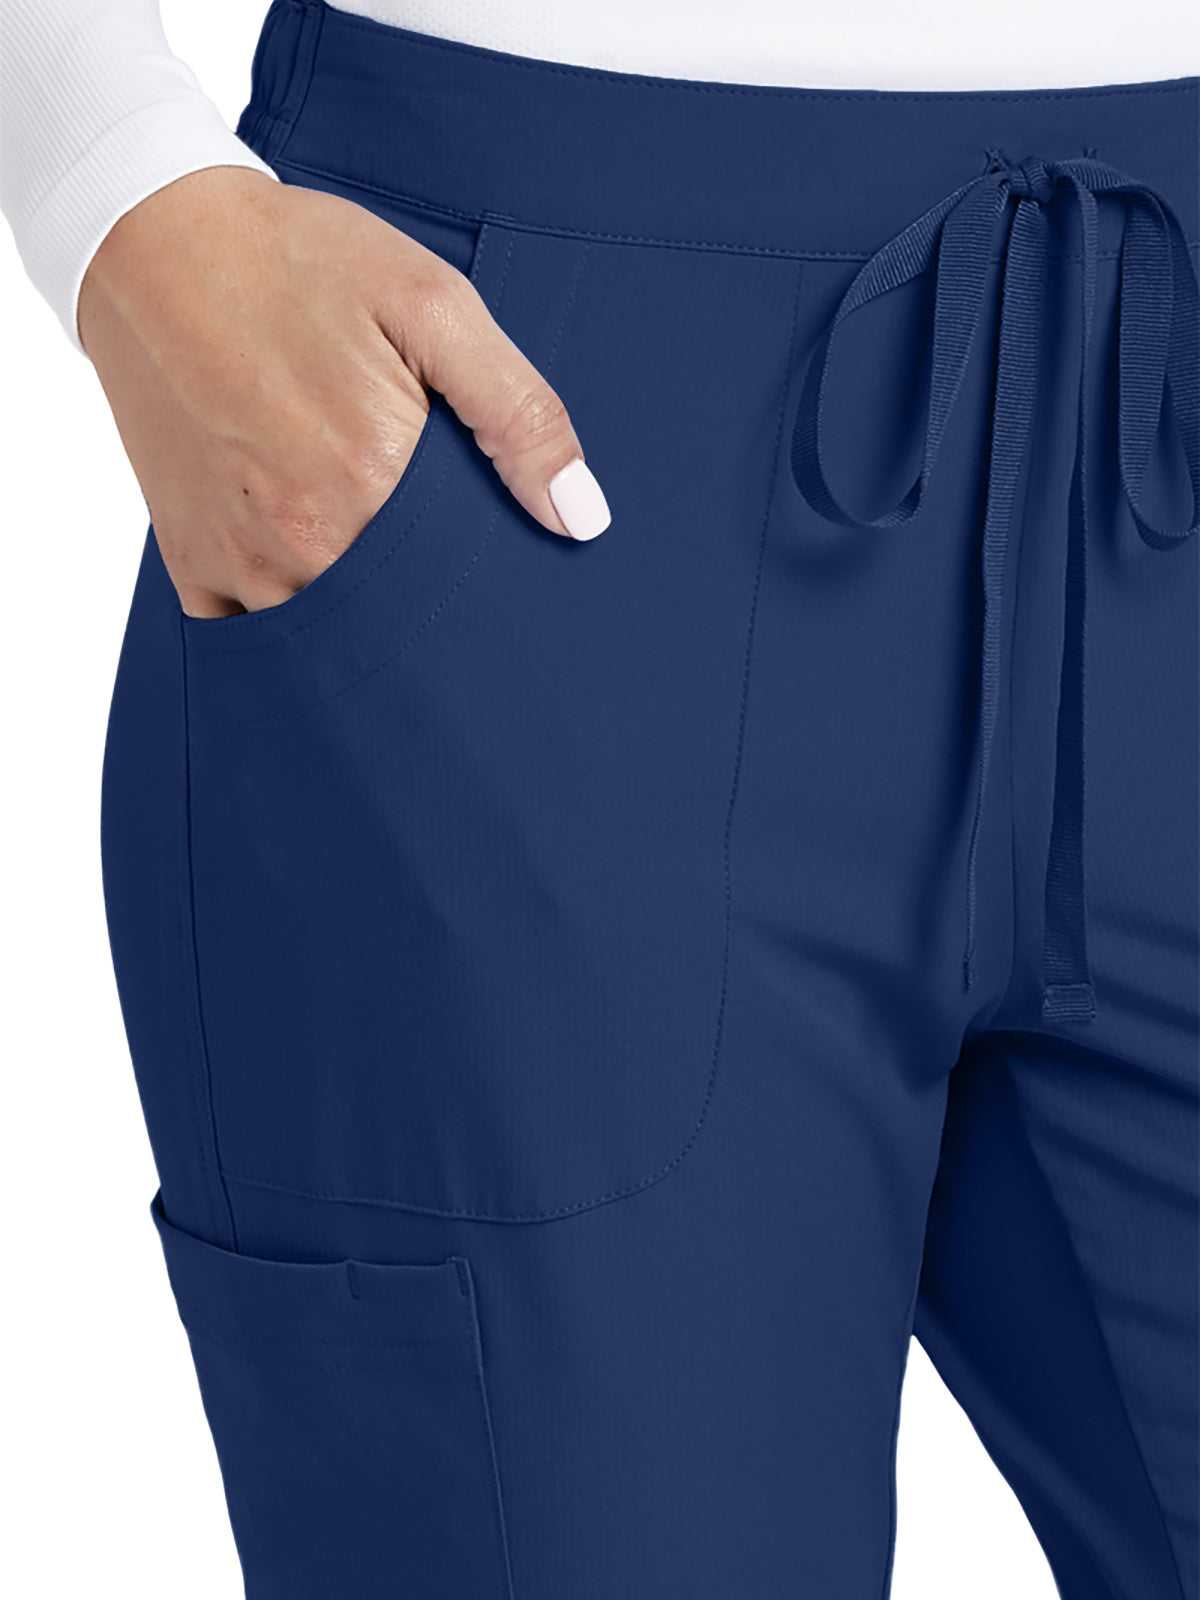 Women's 3-Pocket Pant - SK201 - Navy